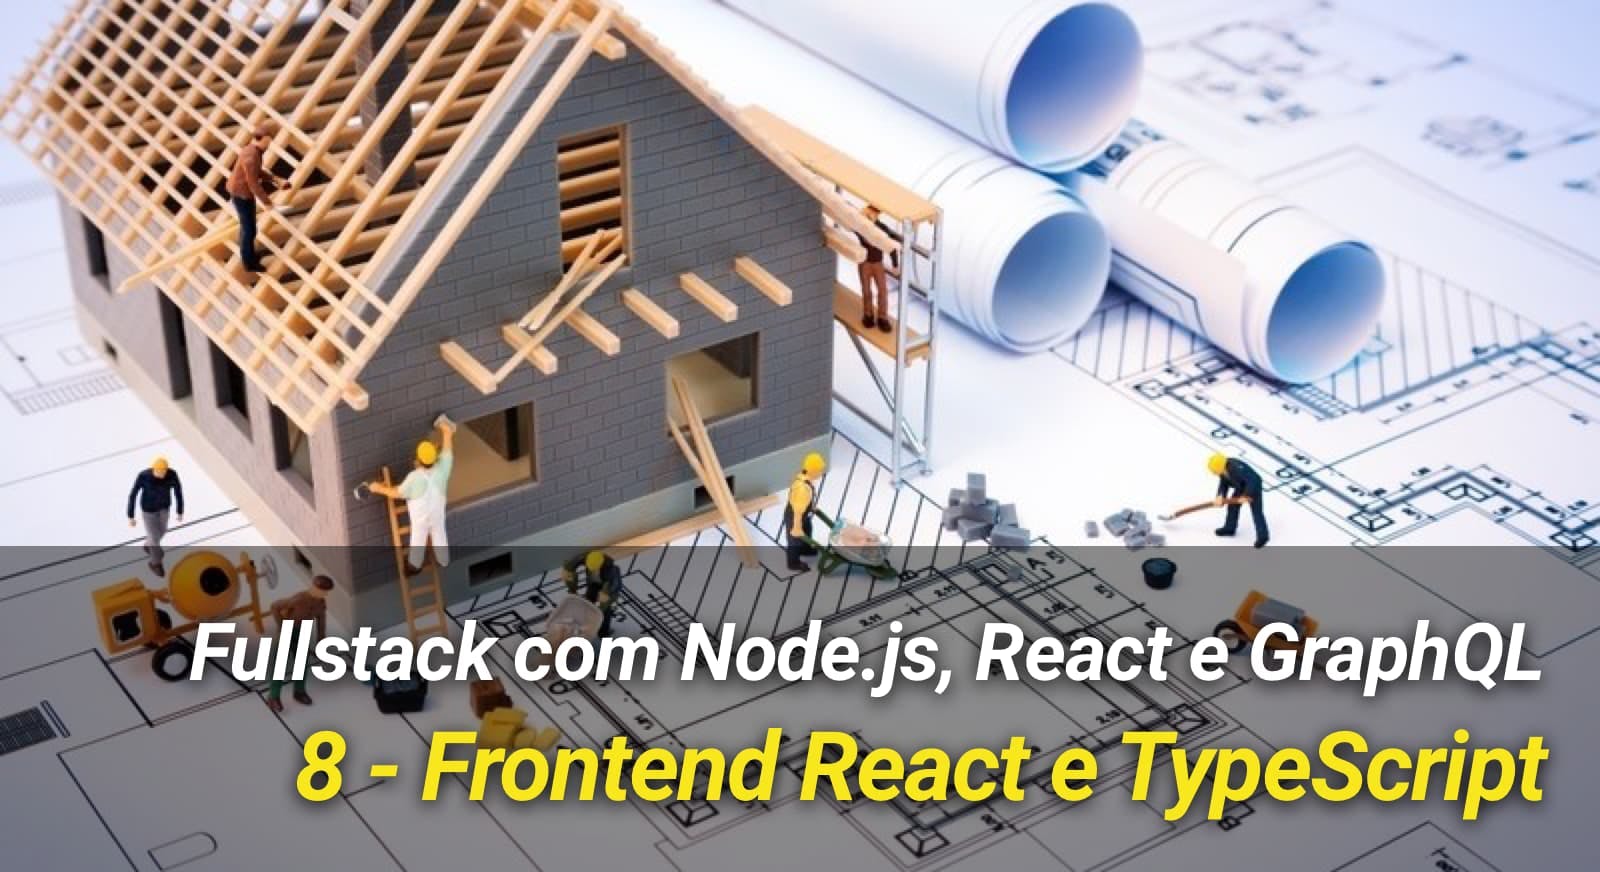 Fullstack com Node.js, React e GraphQL - 8: Frontend React e TypeScript